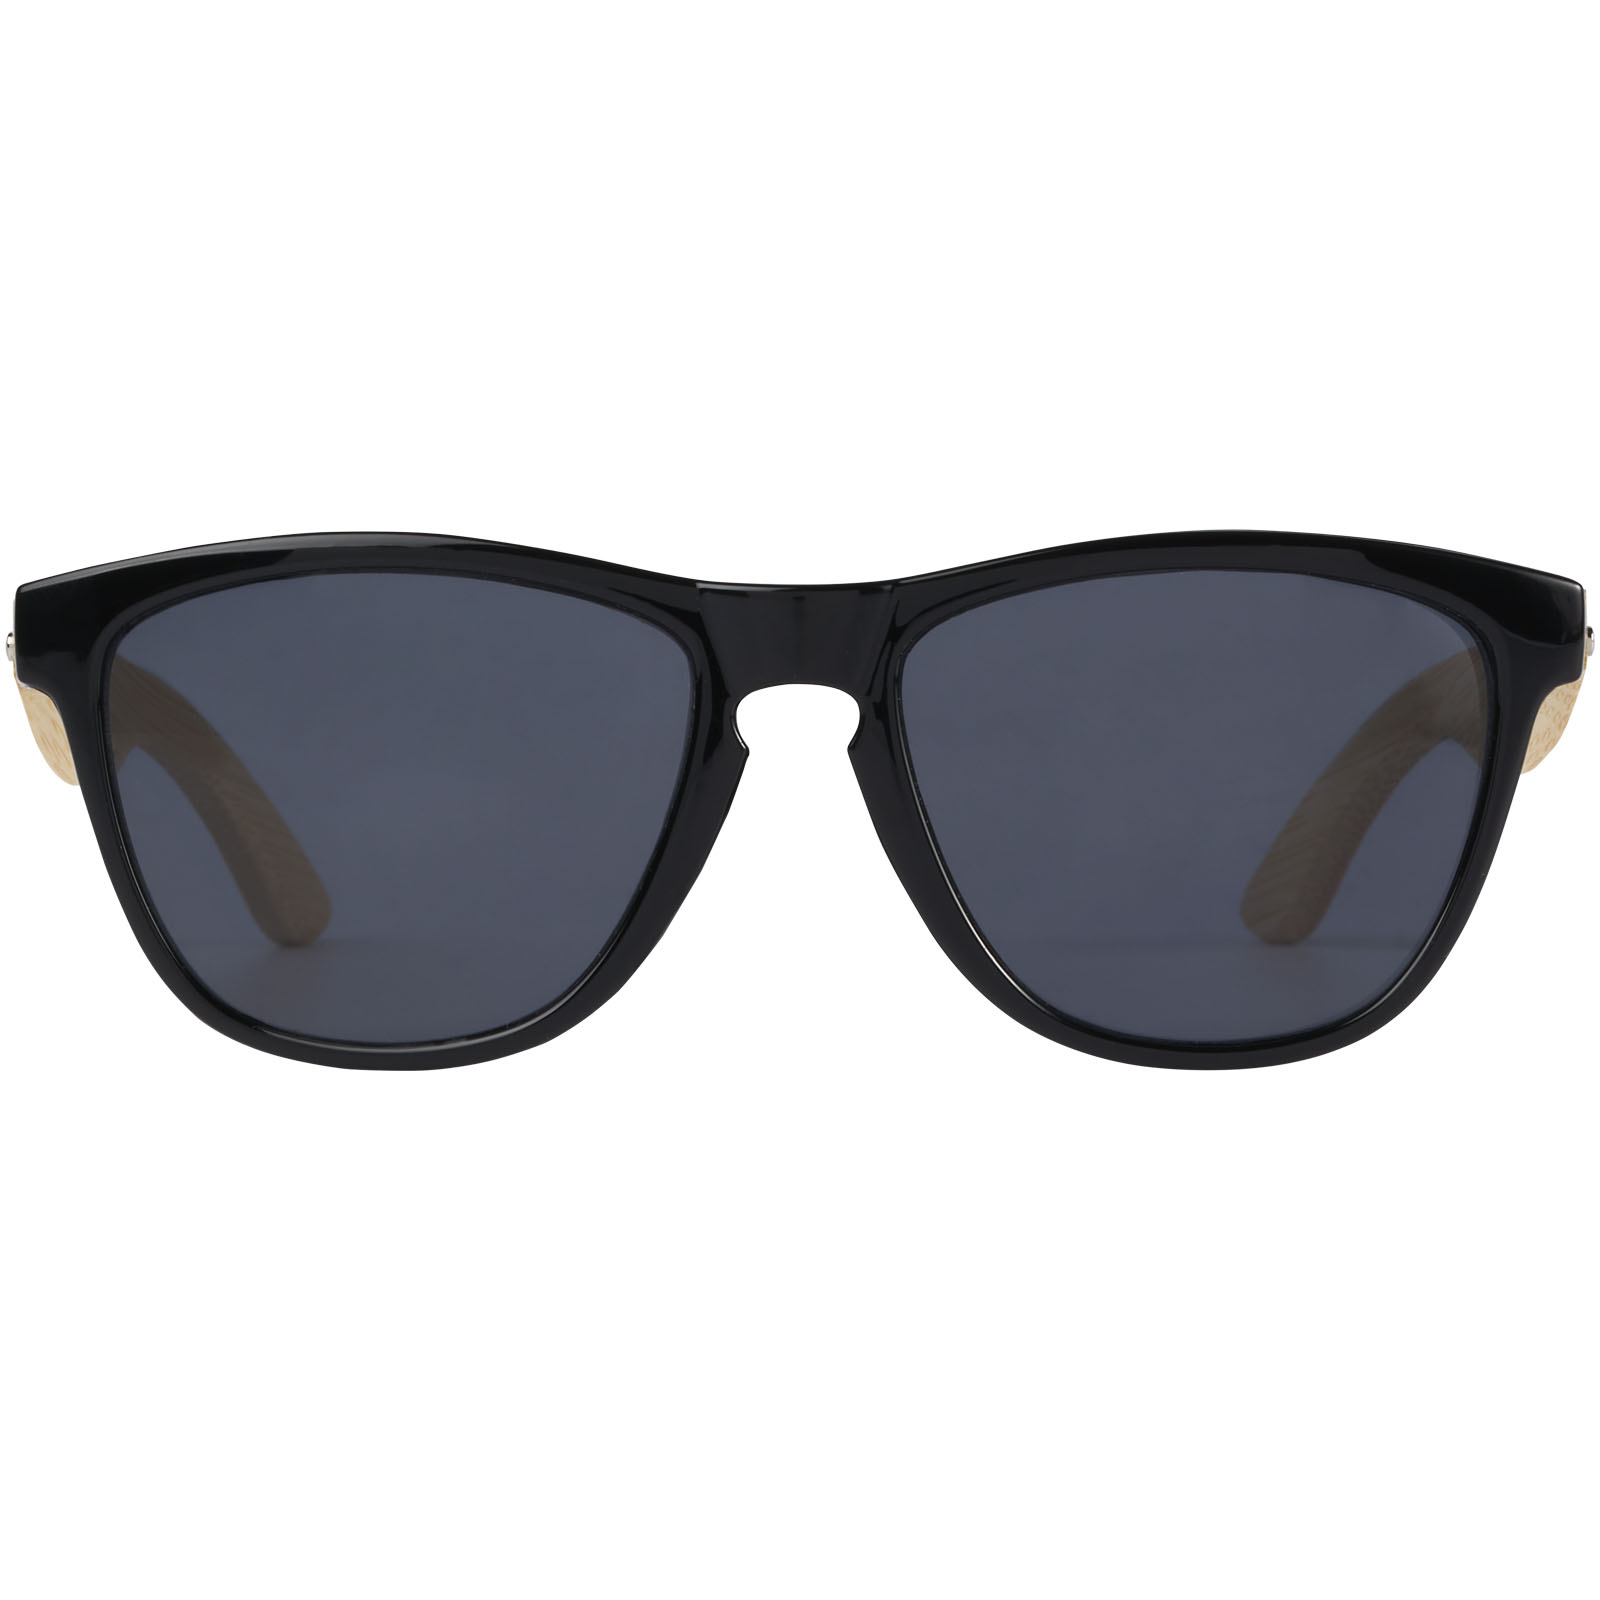 Advertising Sunglasses - Sun Ray ocean bound plastic and bamboo sunglasses - 1